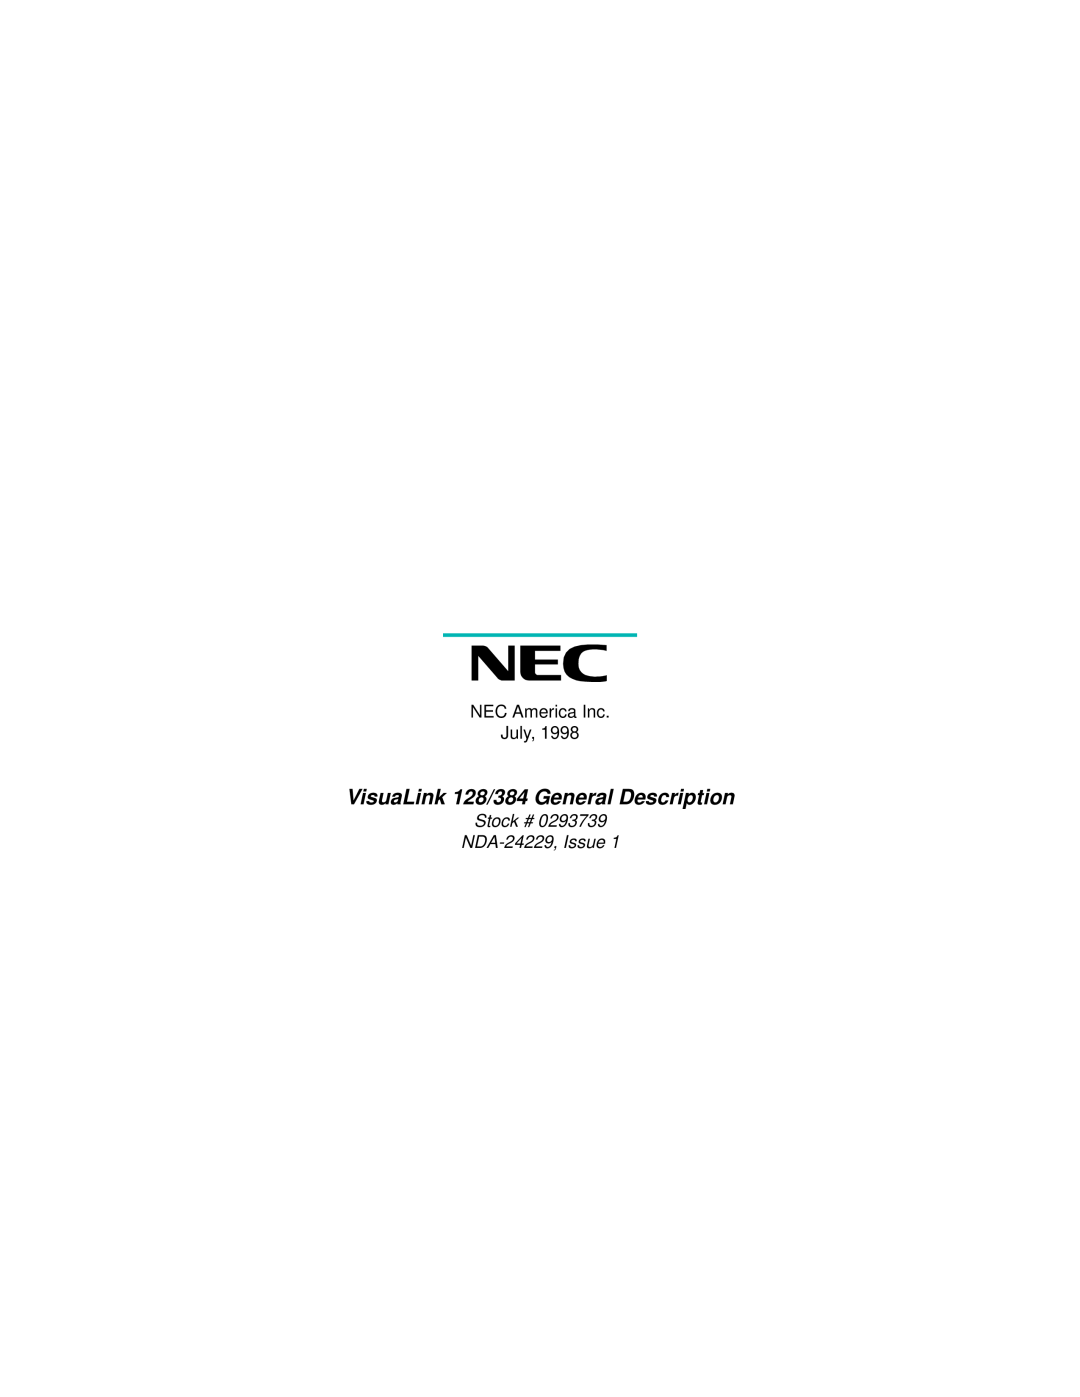 NEC manual VisuaLink 128/384 General Description, Stock # NDA-24229,Issue 